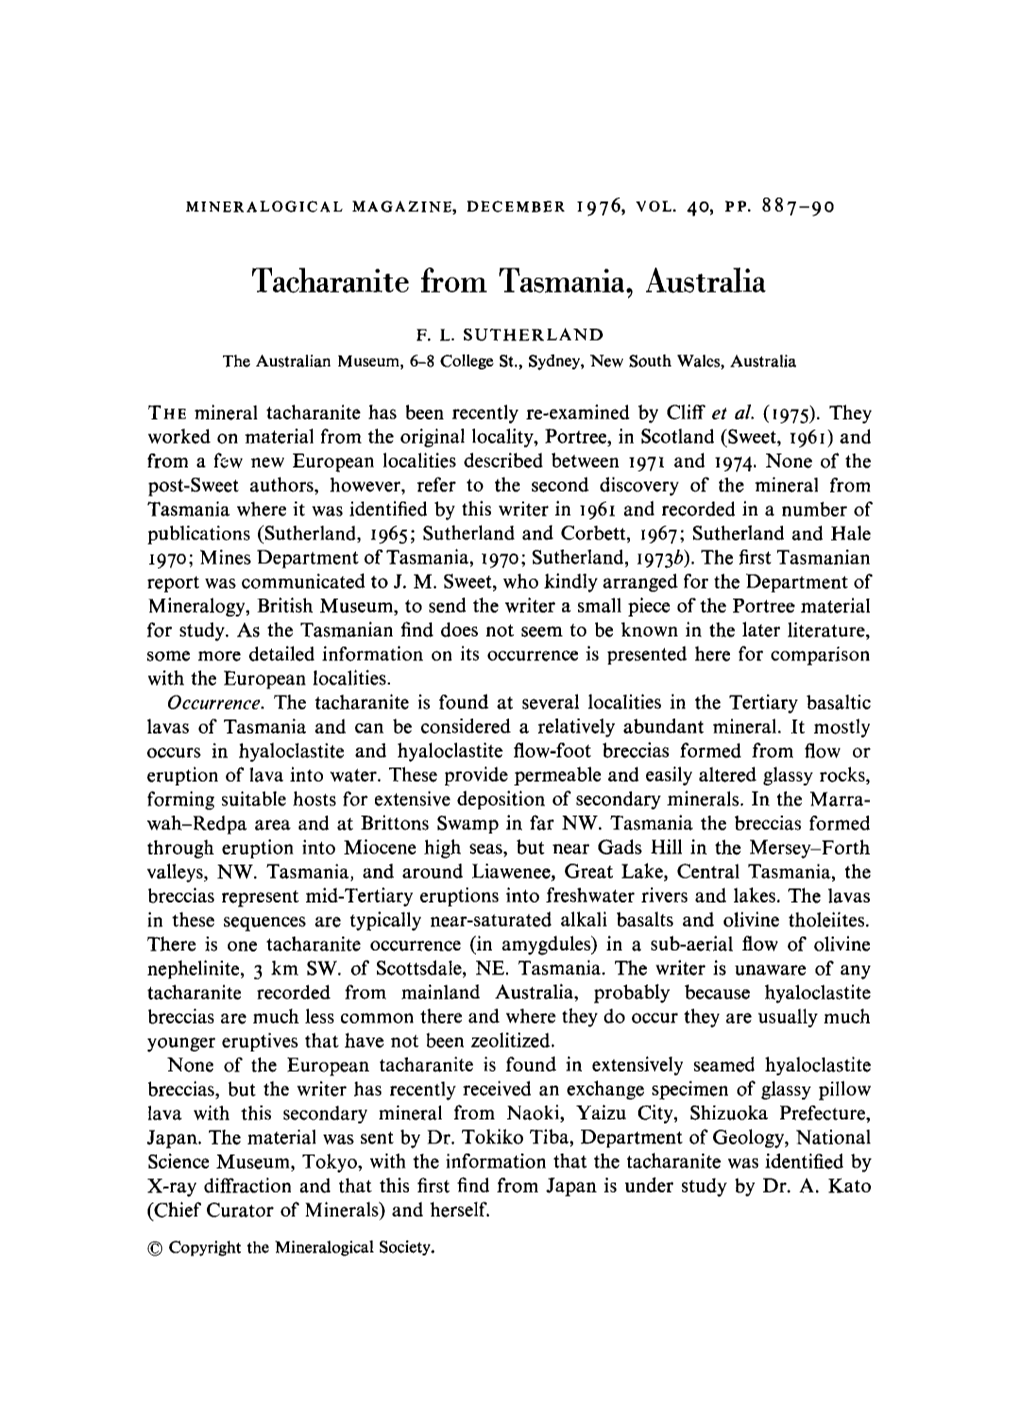 Tacharanite from Tasmania, Australia